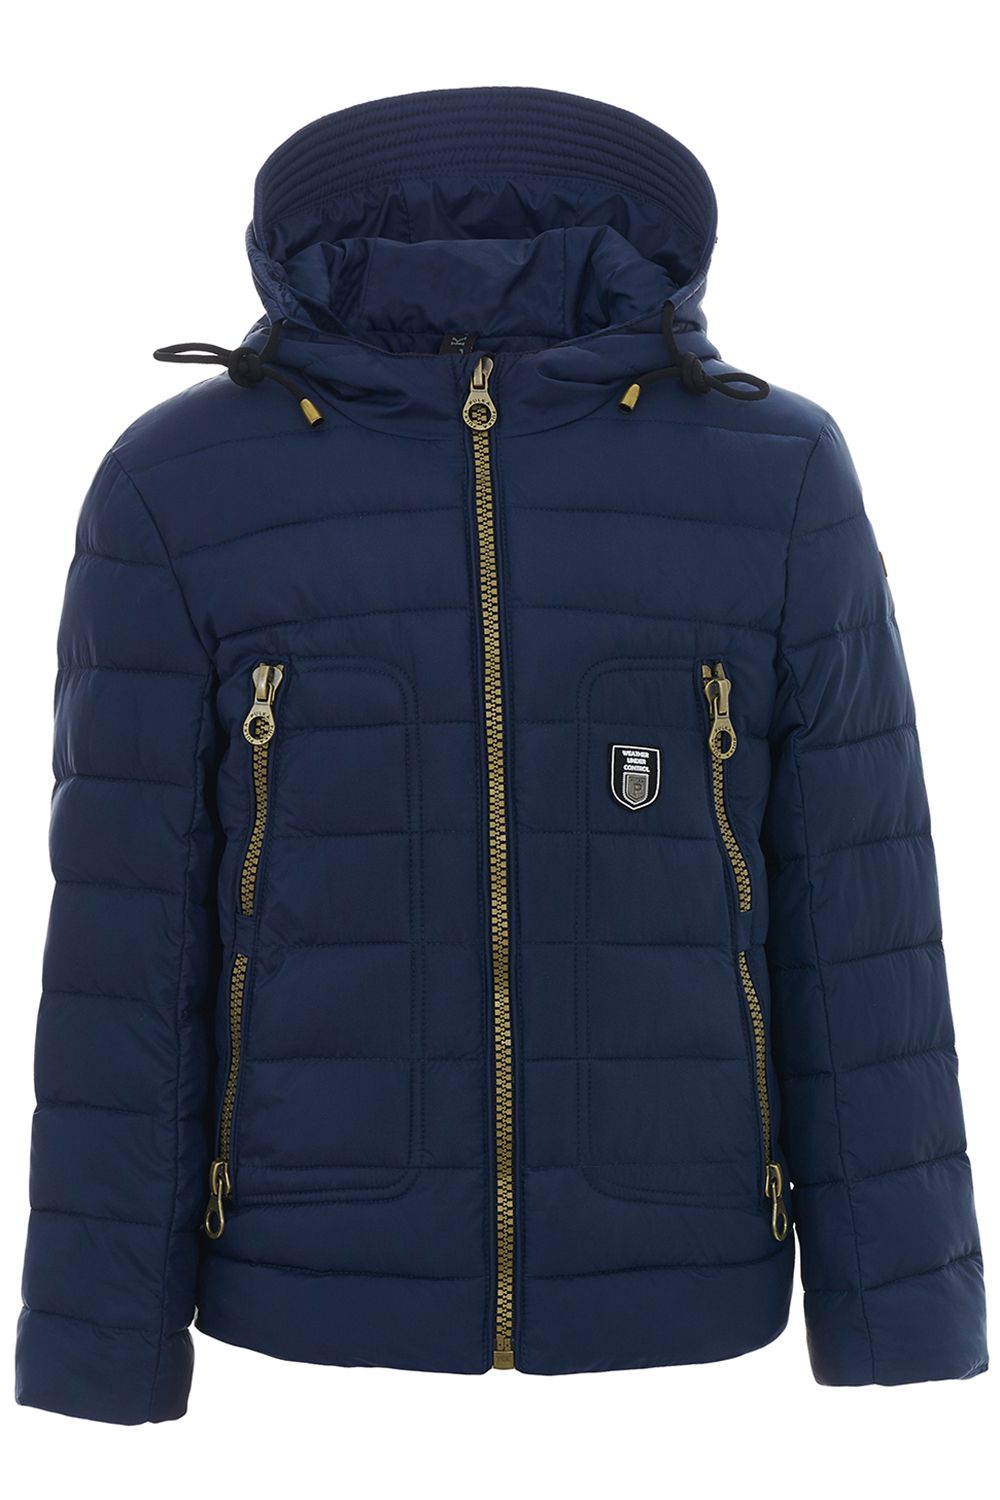 Куртка Pulka, размер 140, цвет синий PUFSB-826-10114-326 - фото 1